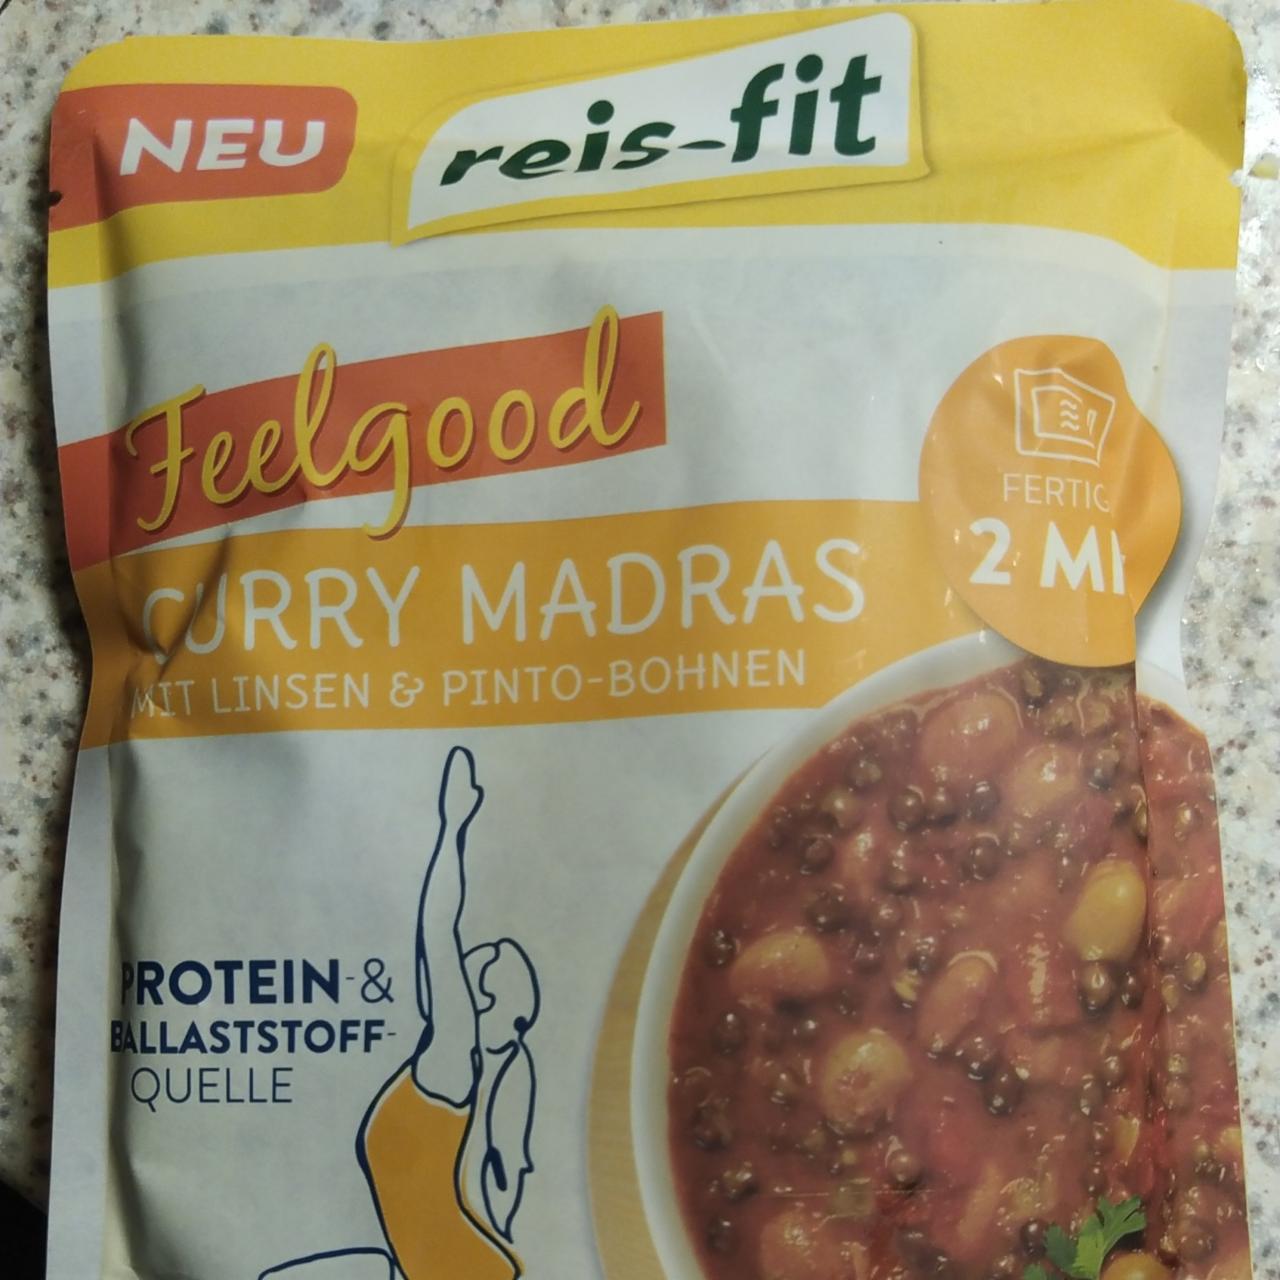 Fotografie - Feelgood Curry madras mit linsen & pinto-bohnen Reis-fit